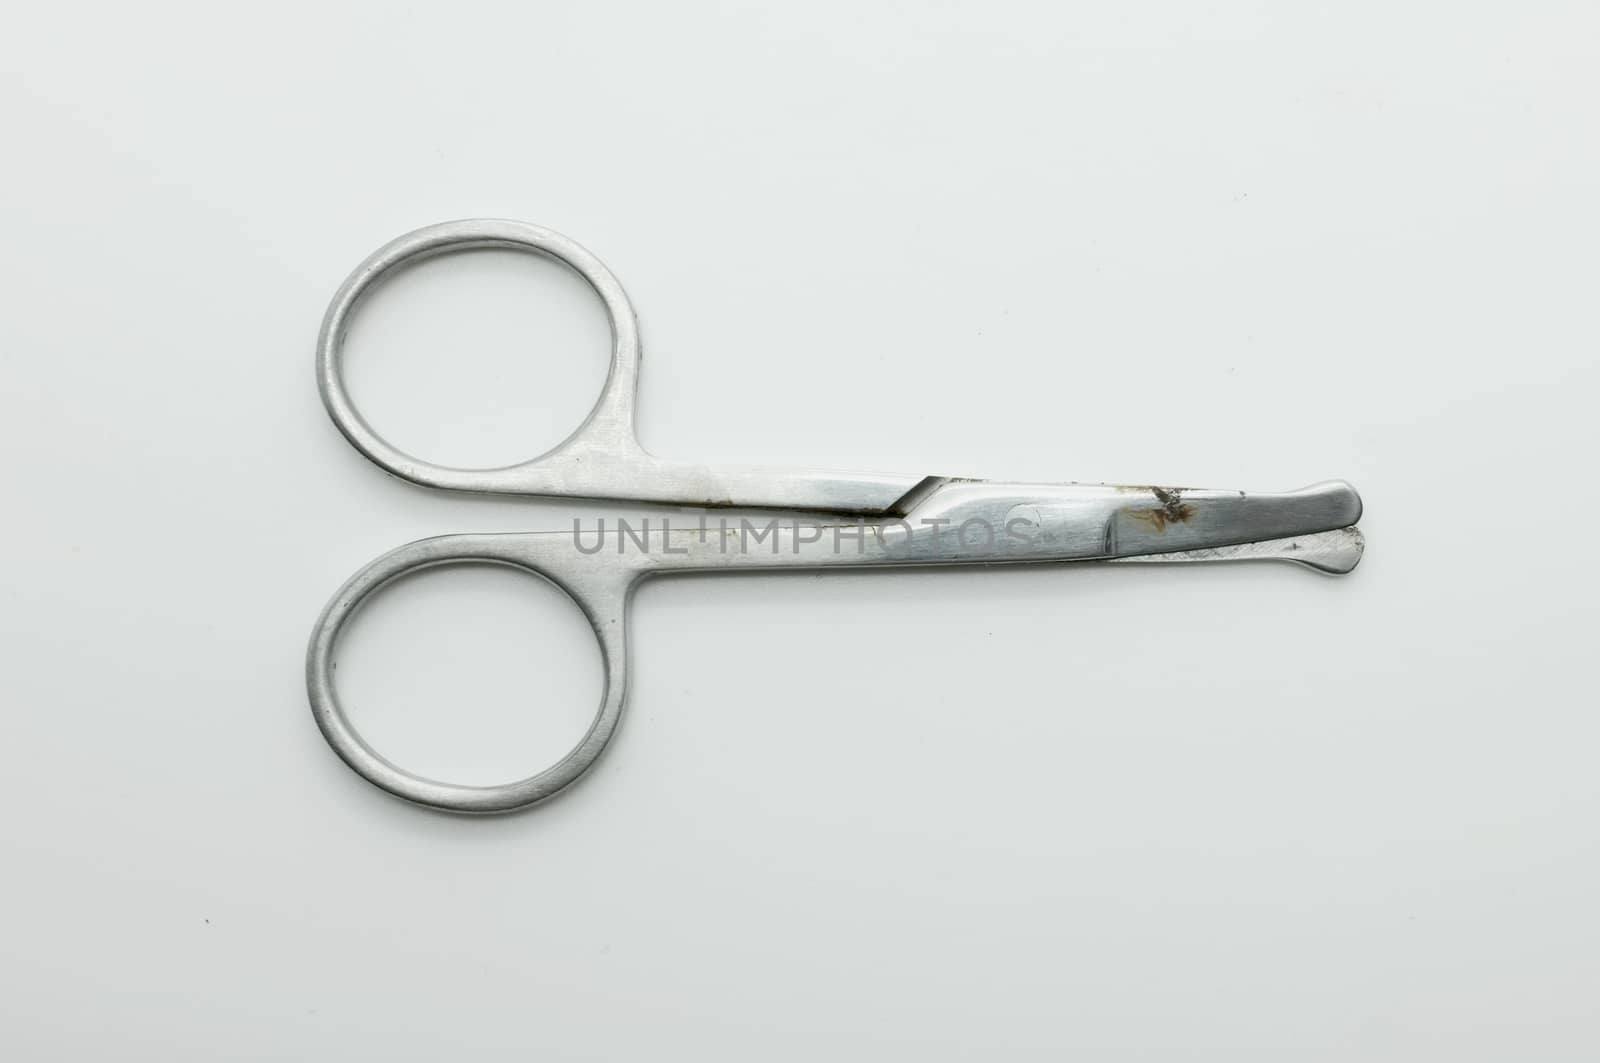 Nose hair clipper, scissors